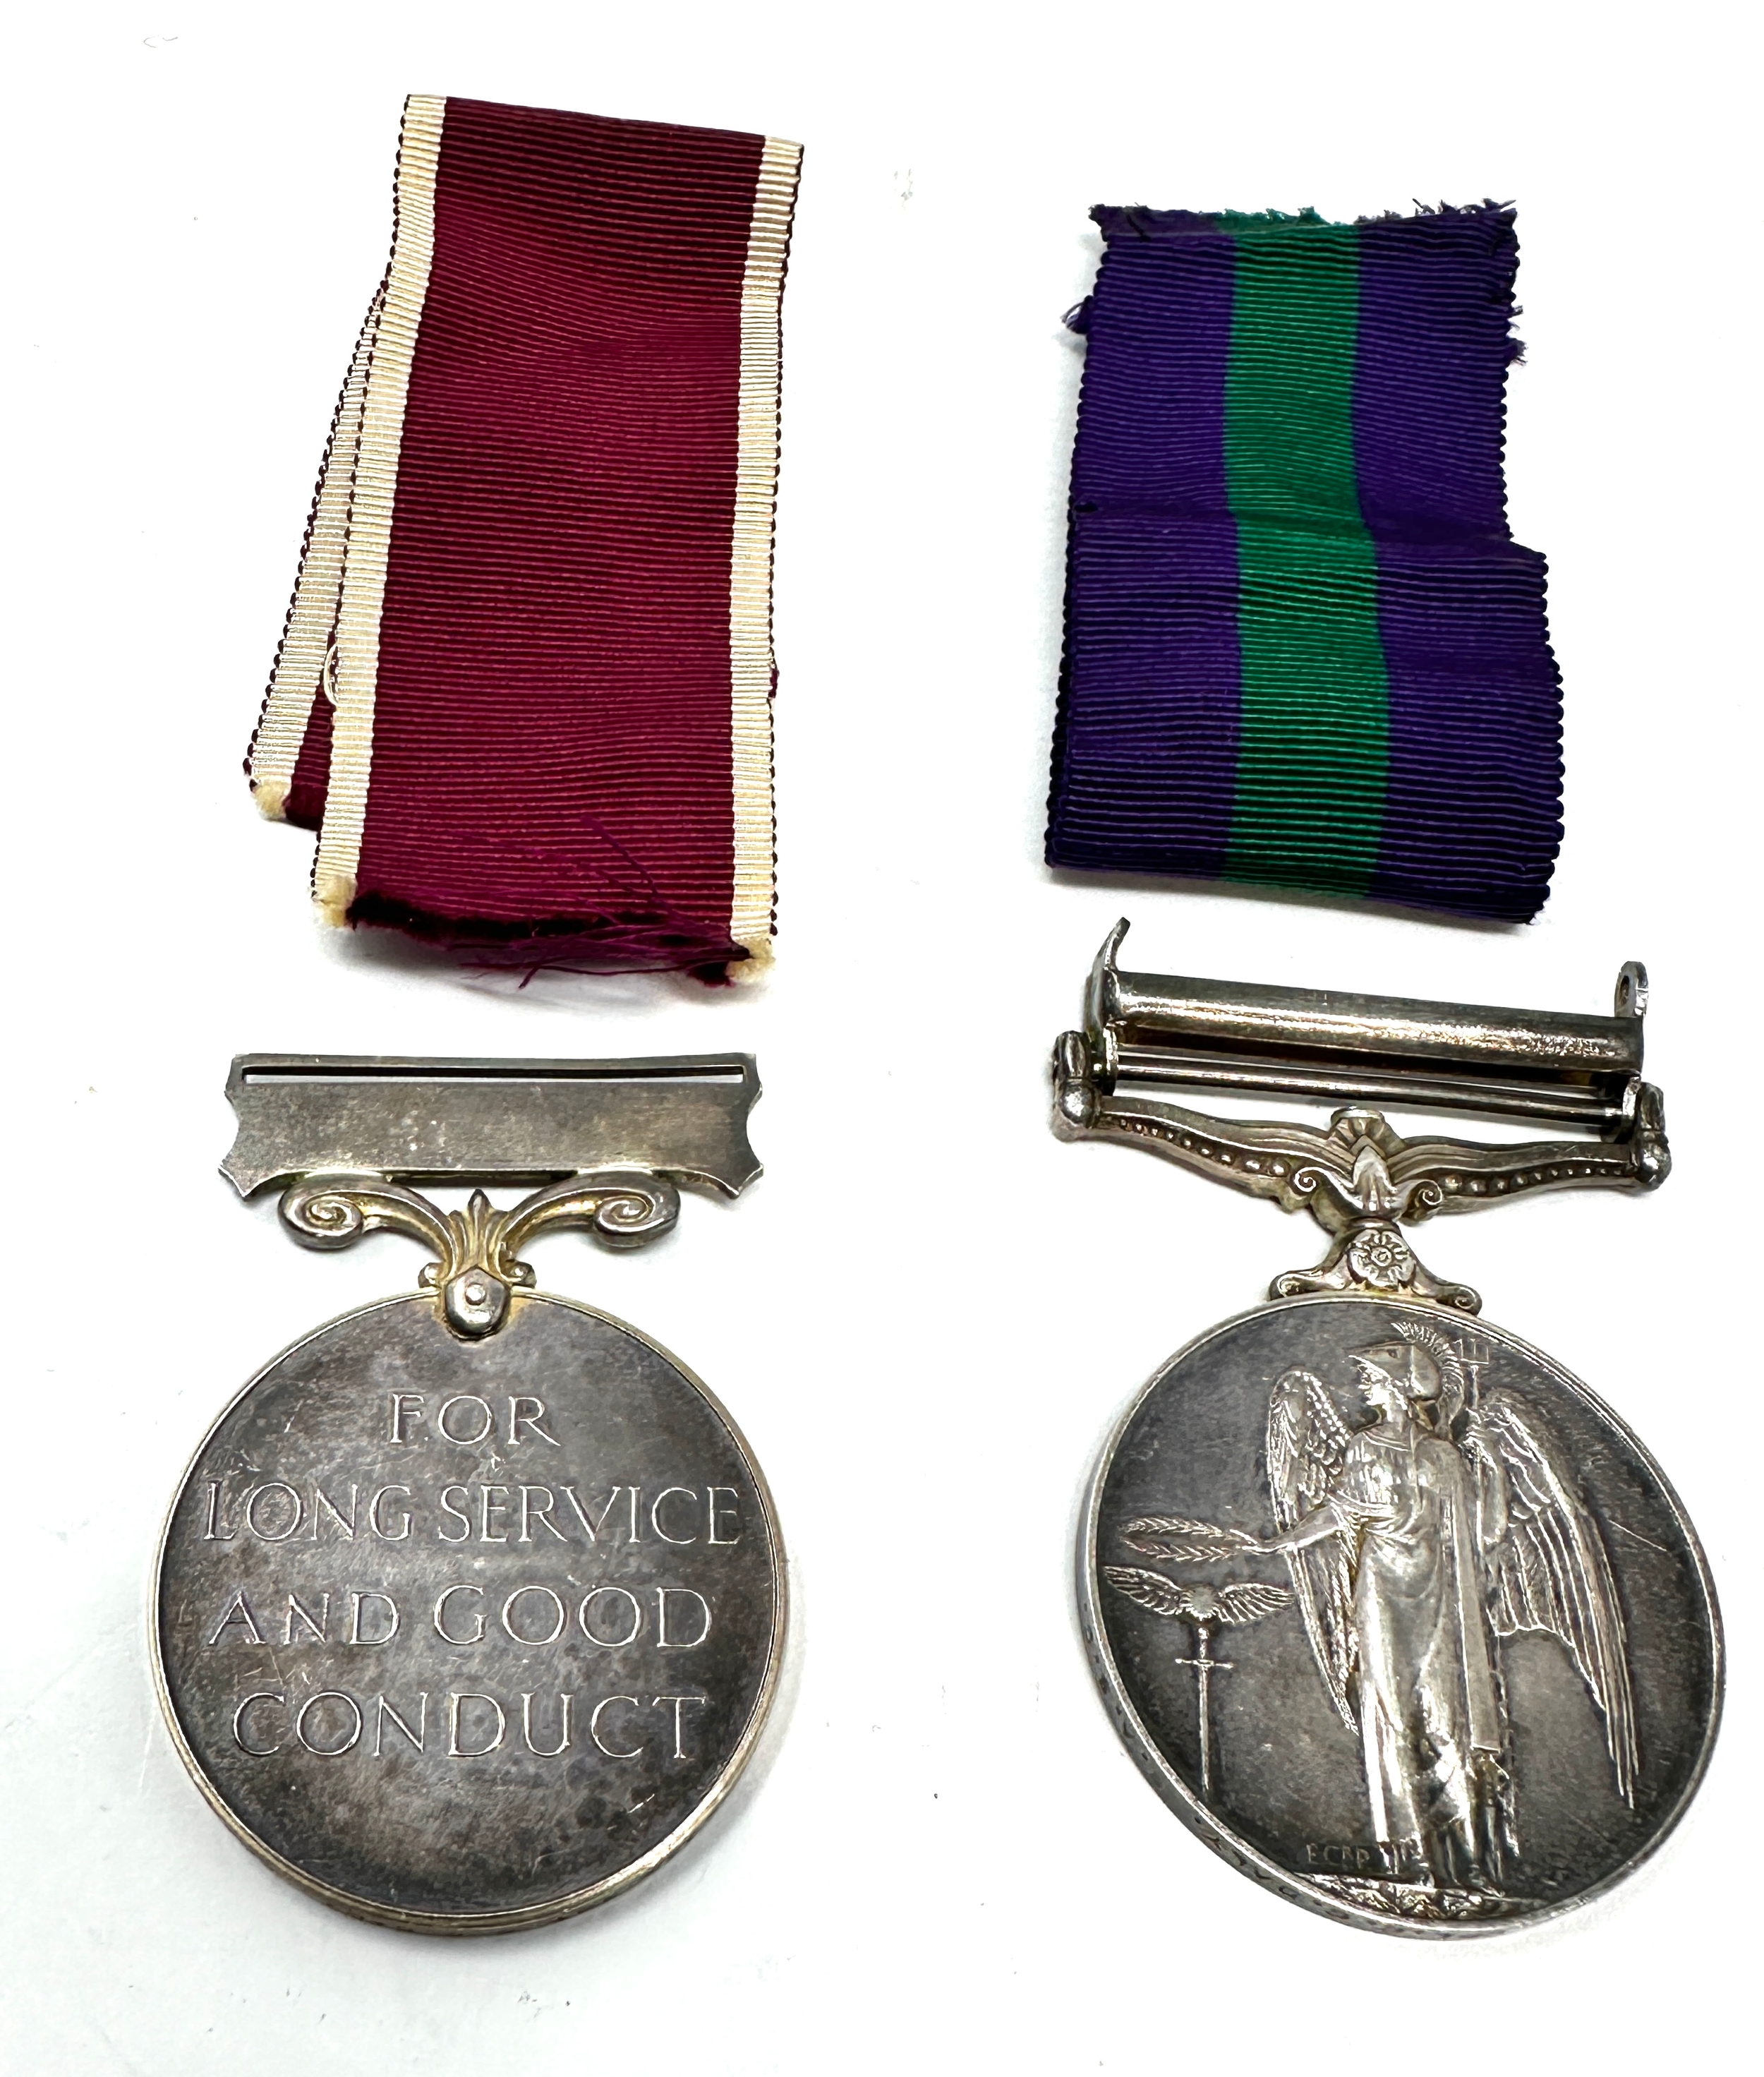 pair medals Elizabeth II General Service Medal Malaya & LS GC Regular army medal to 21026332 sgt c. - Image 2 of 2